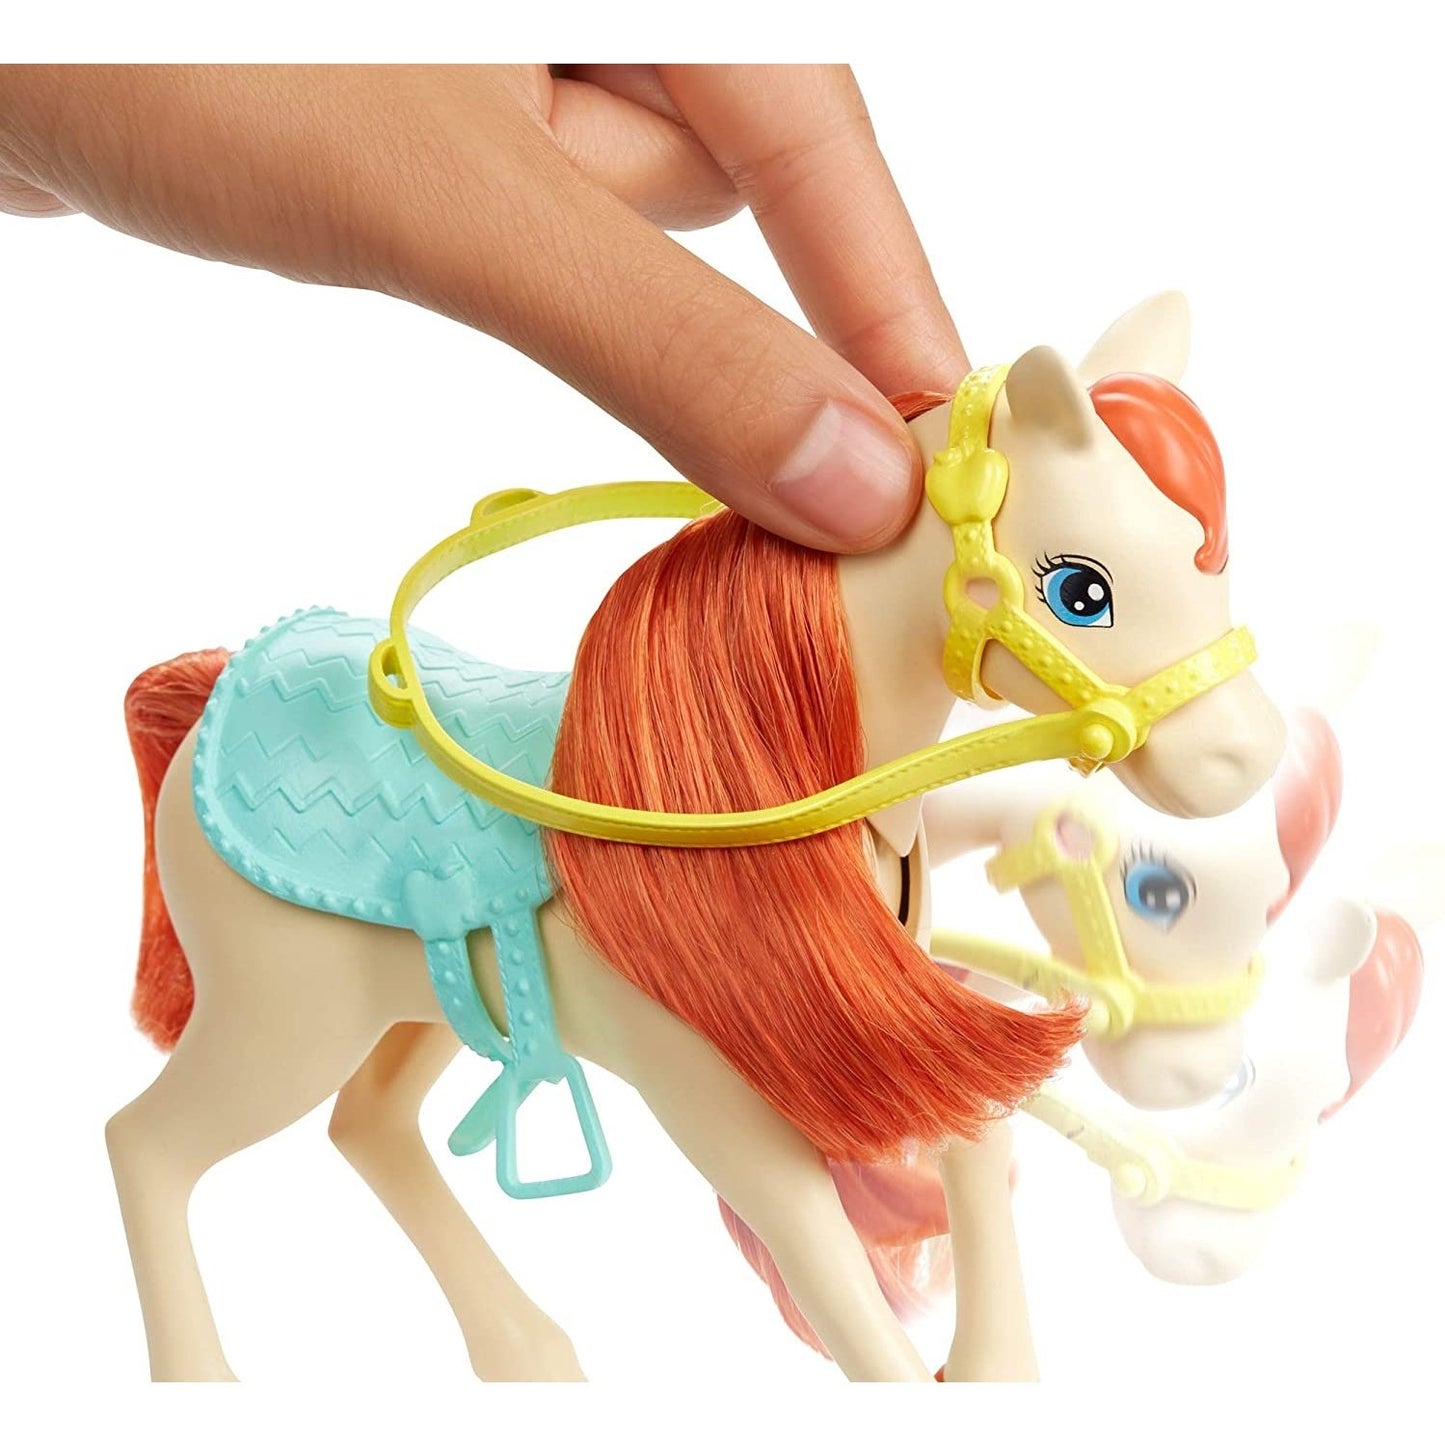 Barbie Hugs 'n' Horses Doll and Horse Playset SpadezStore